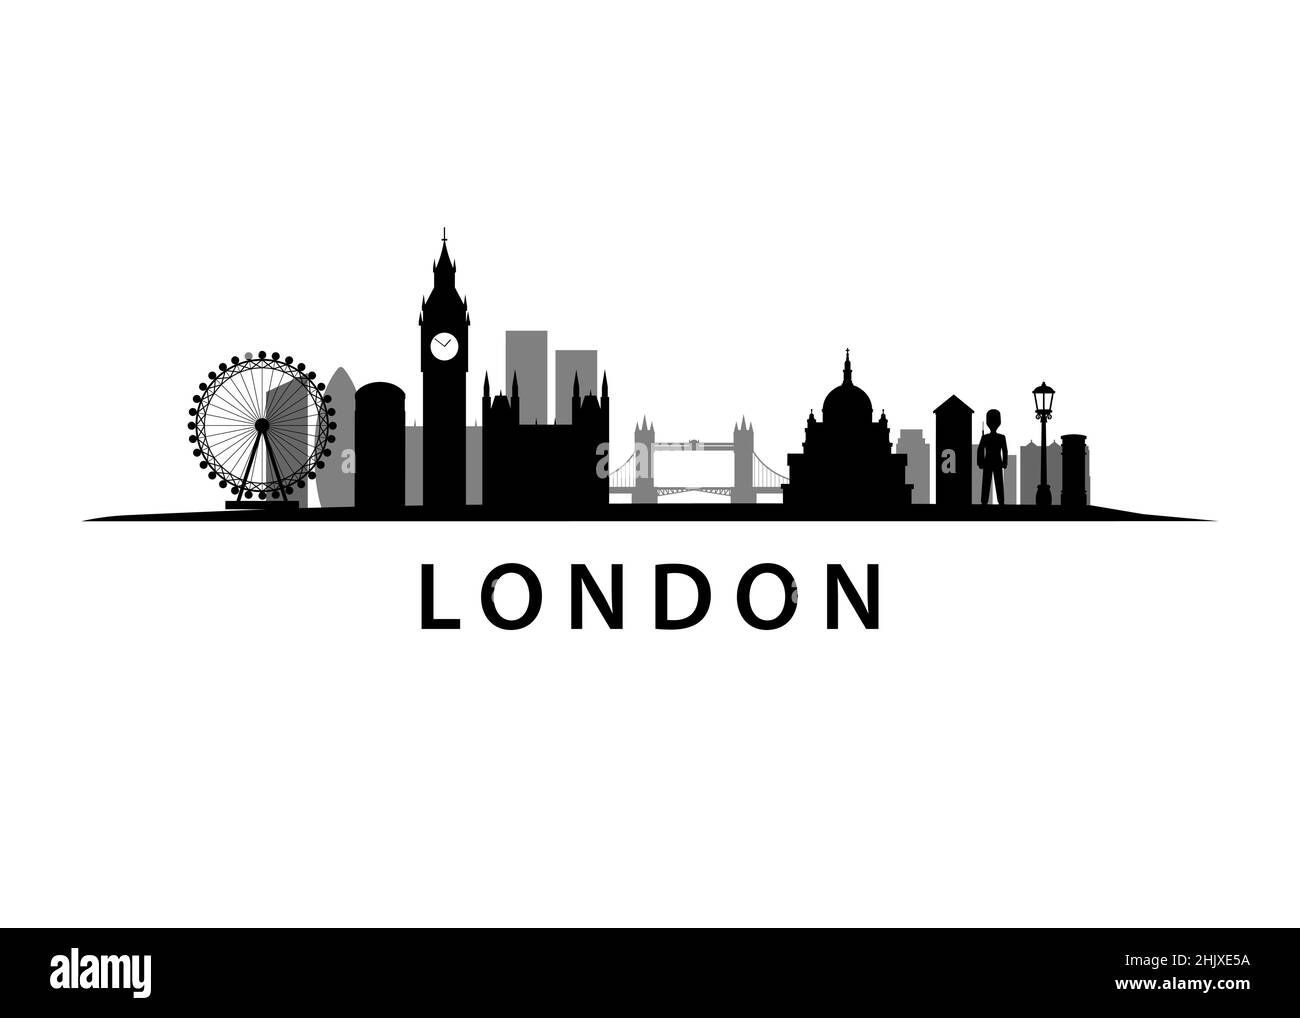 London Capitol of United Kingdom, CItyscape, Skyline, Town Landscape in black, silhouette, vector graphic Stock Vector